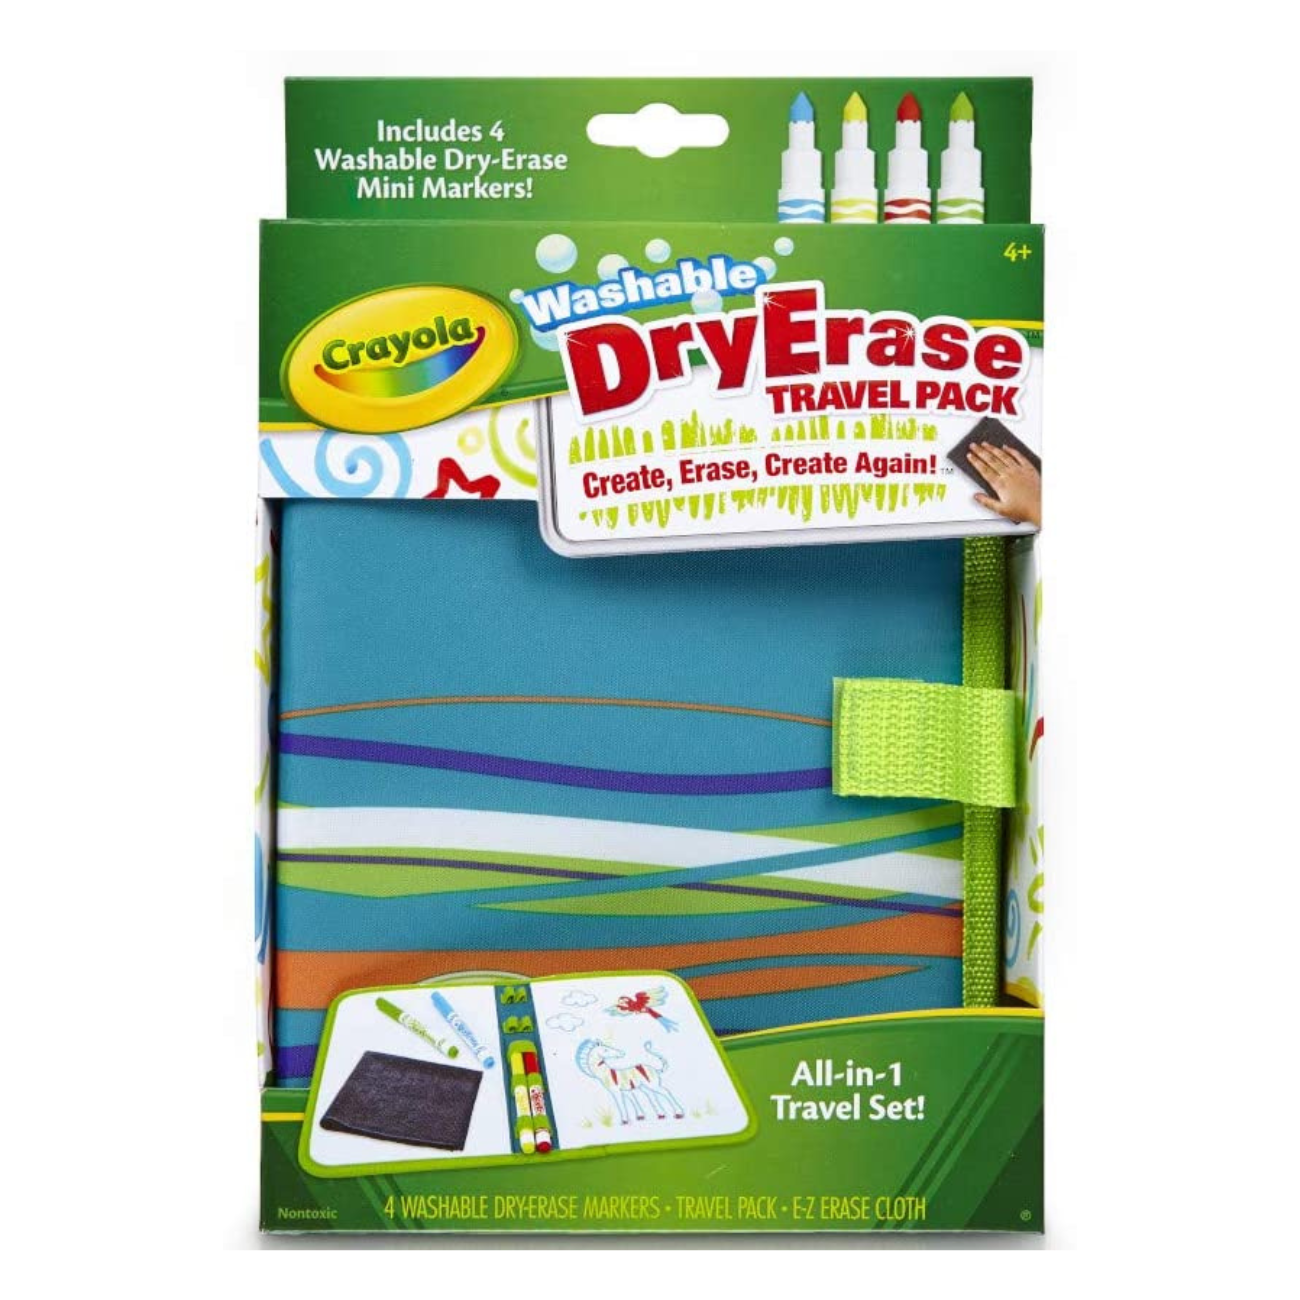 So Much To Make: Dry Erase Travel Kit